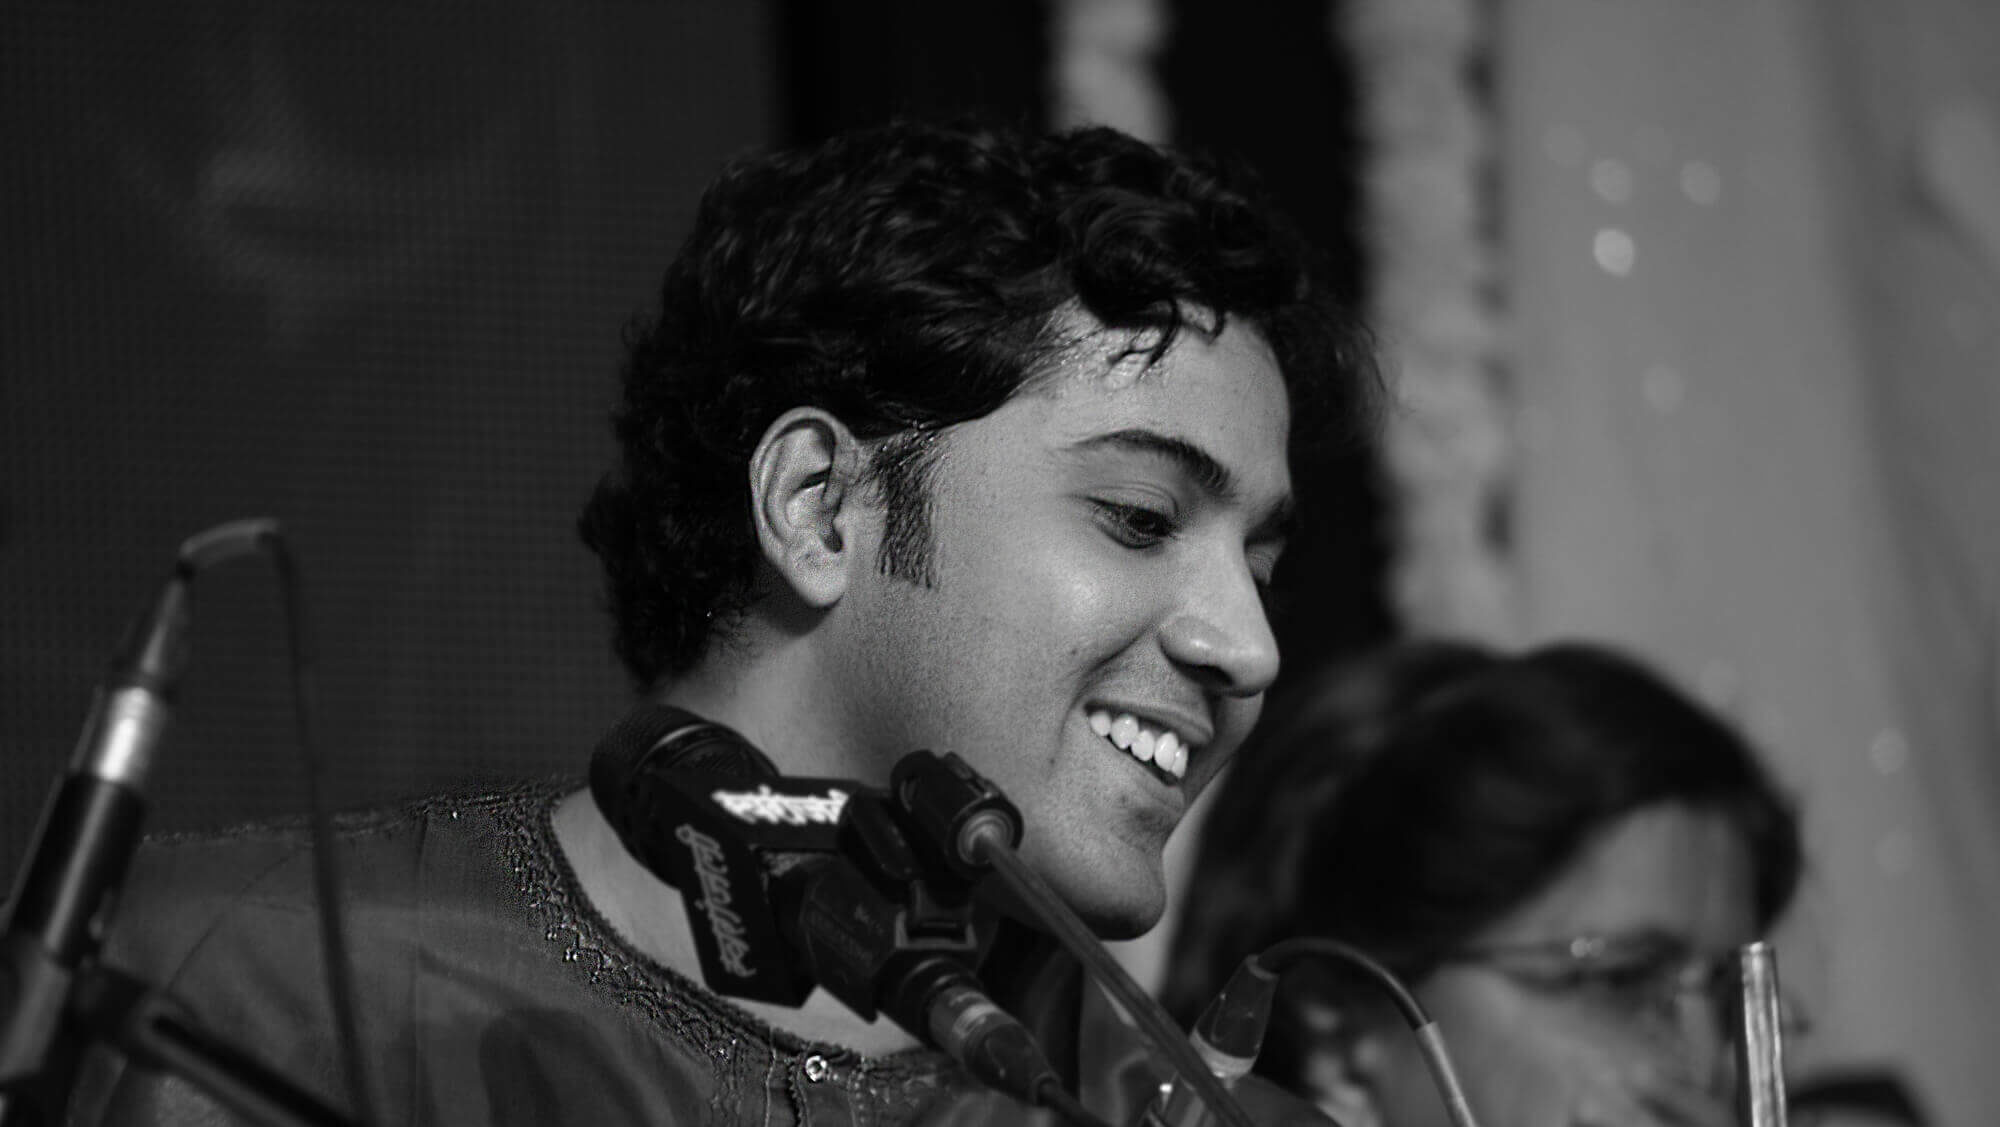 Samrat Pandit black and white portrait of the artist smiling on stage